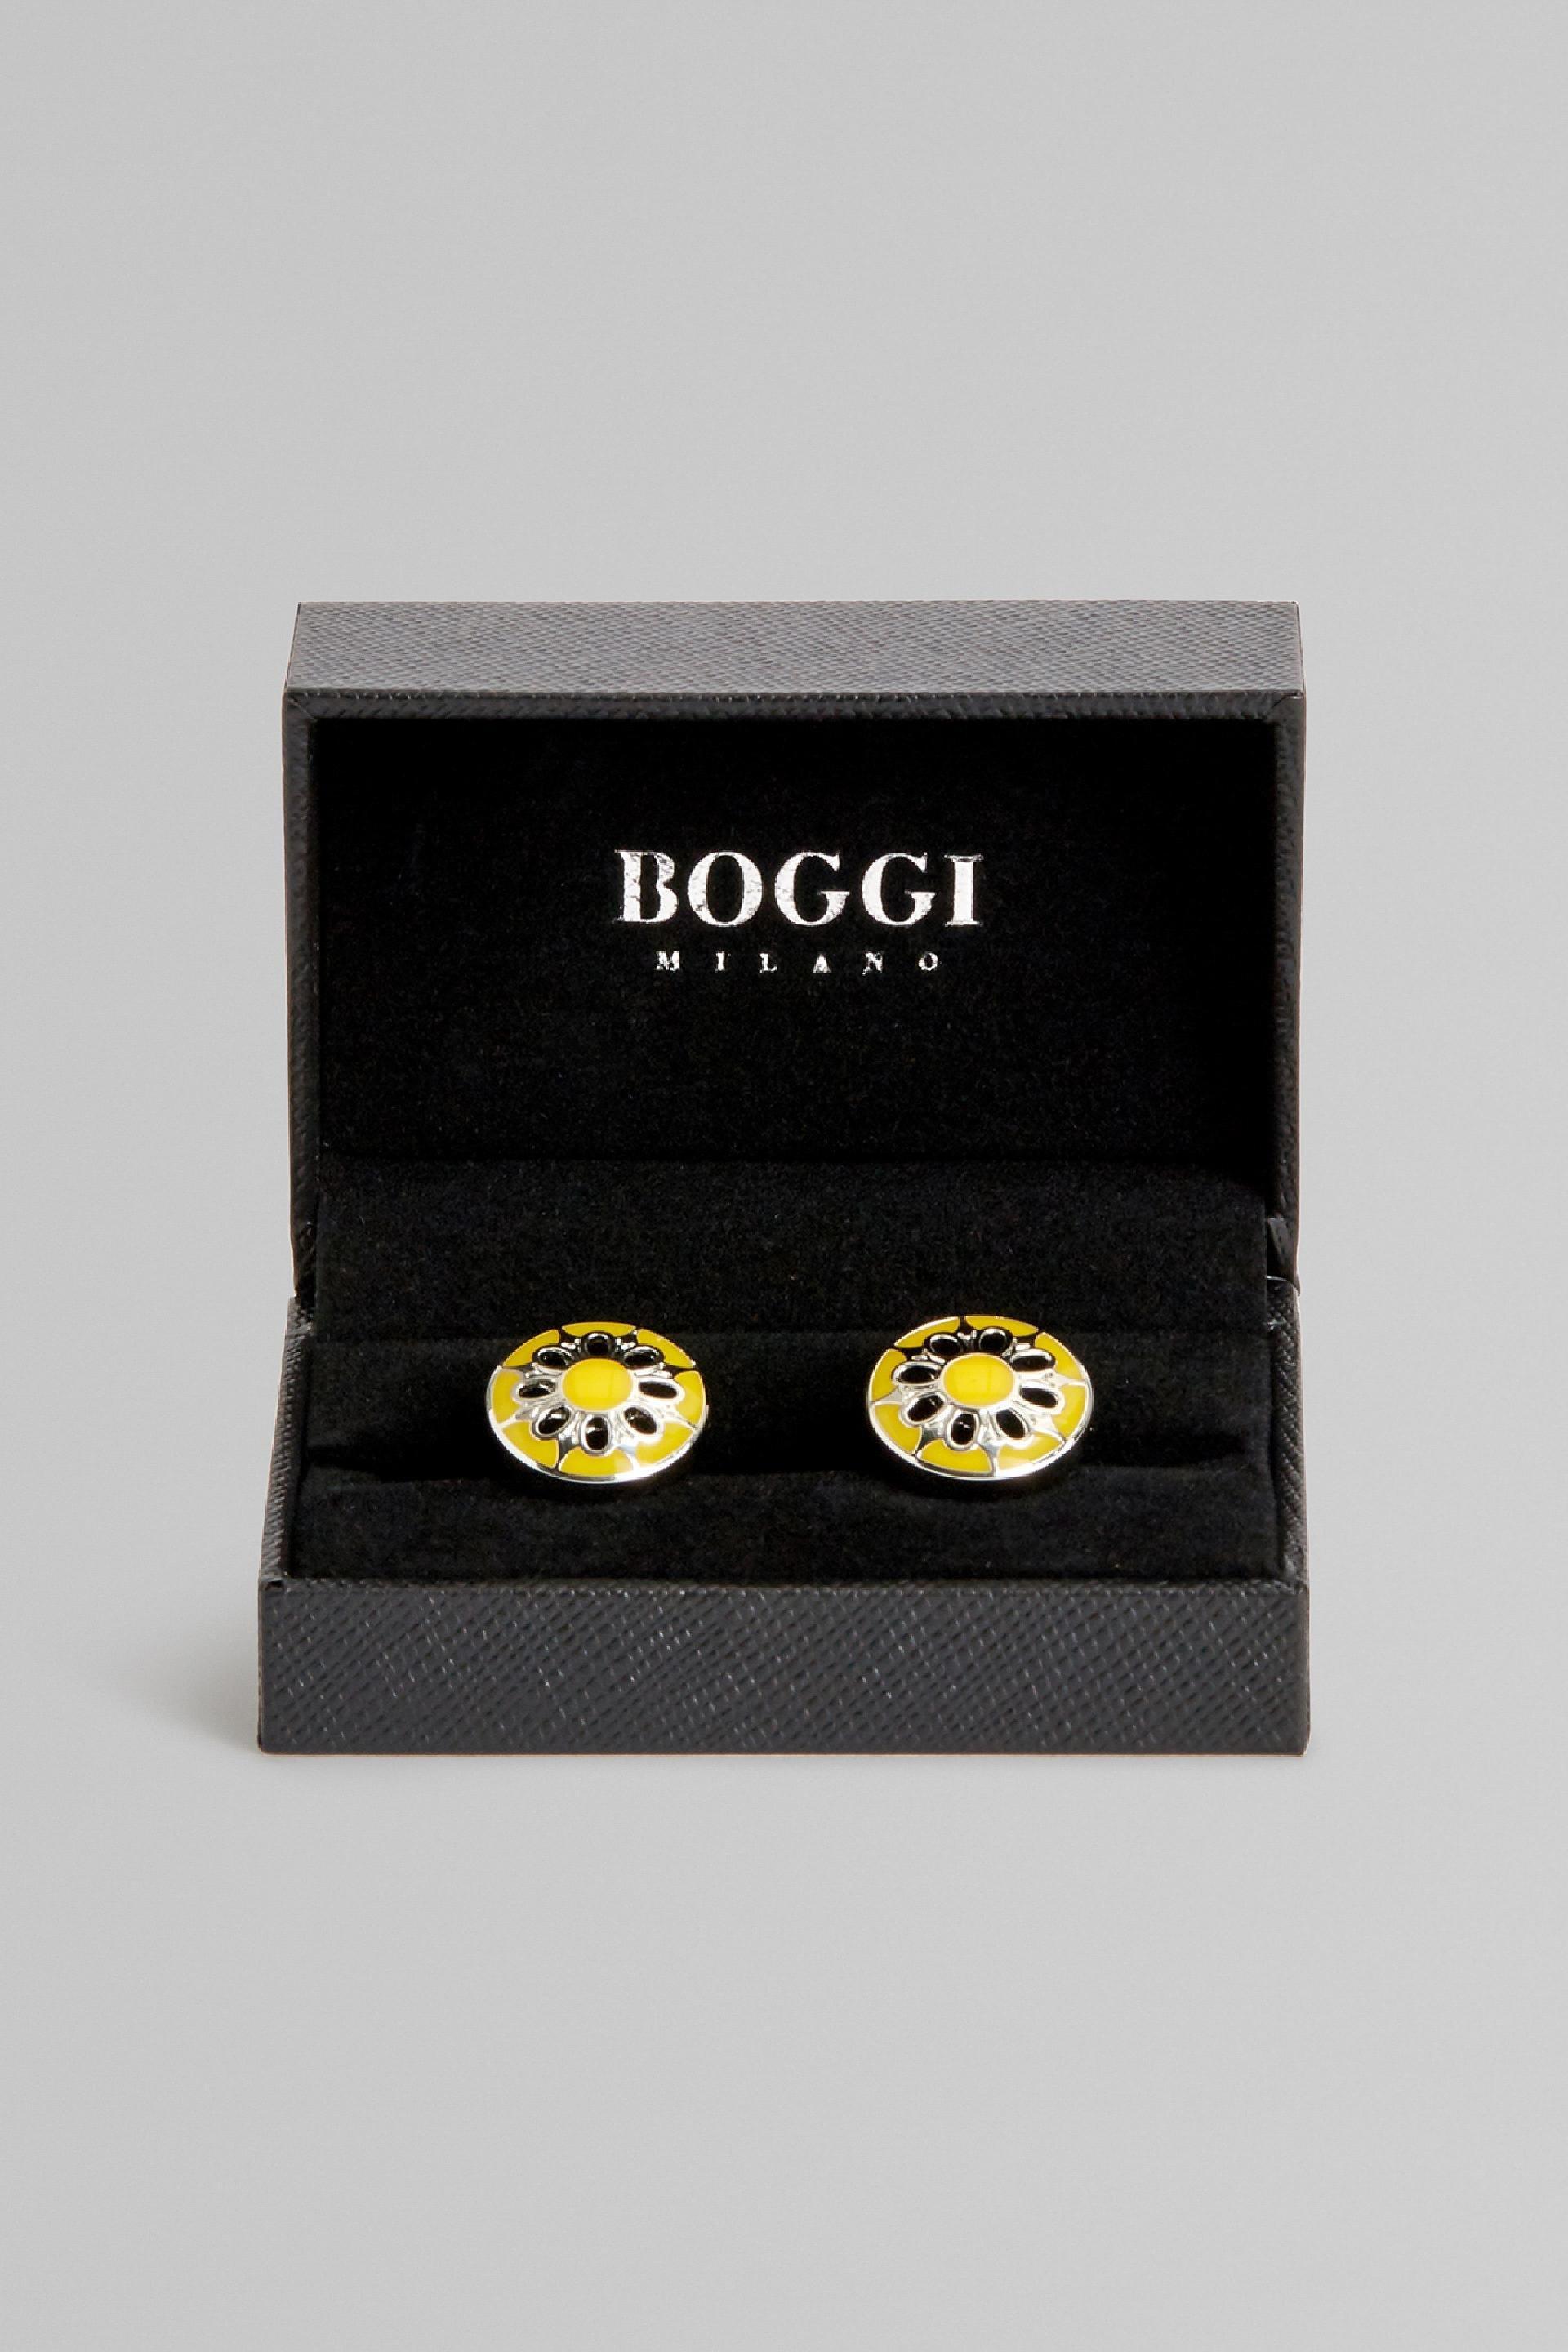 Boggi Milano - Yellow Floral Circular Cufflinks